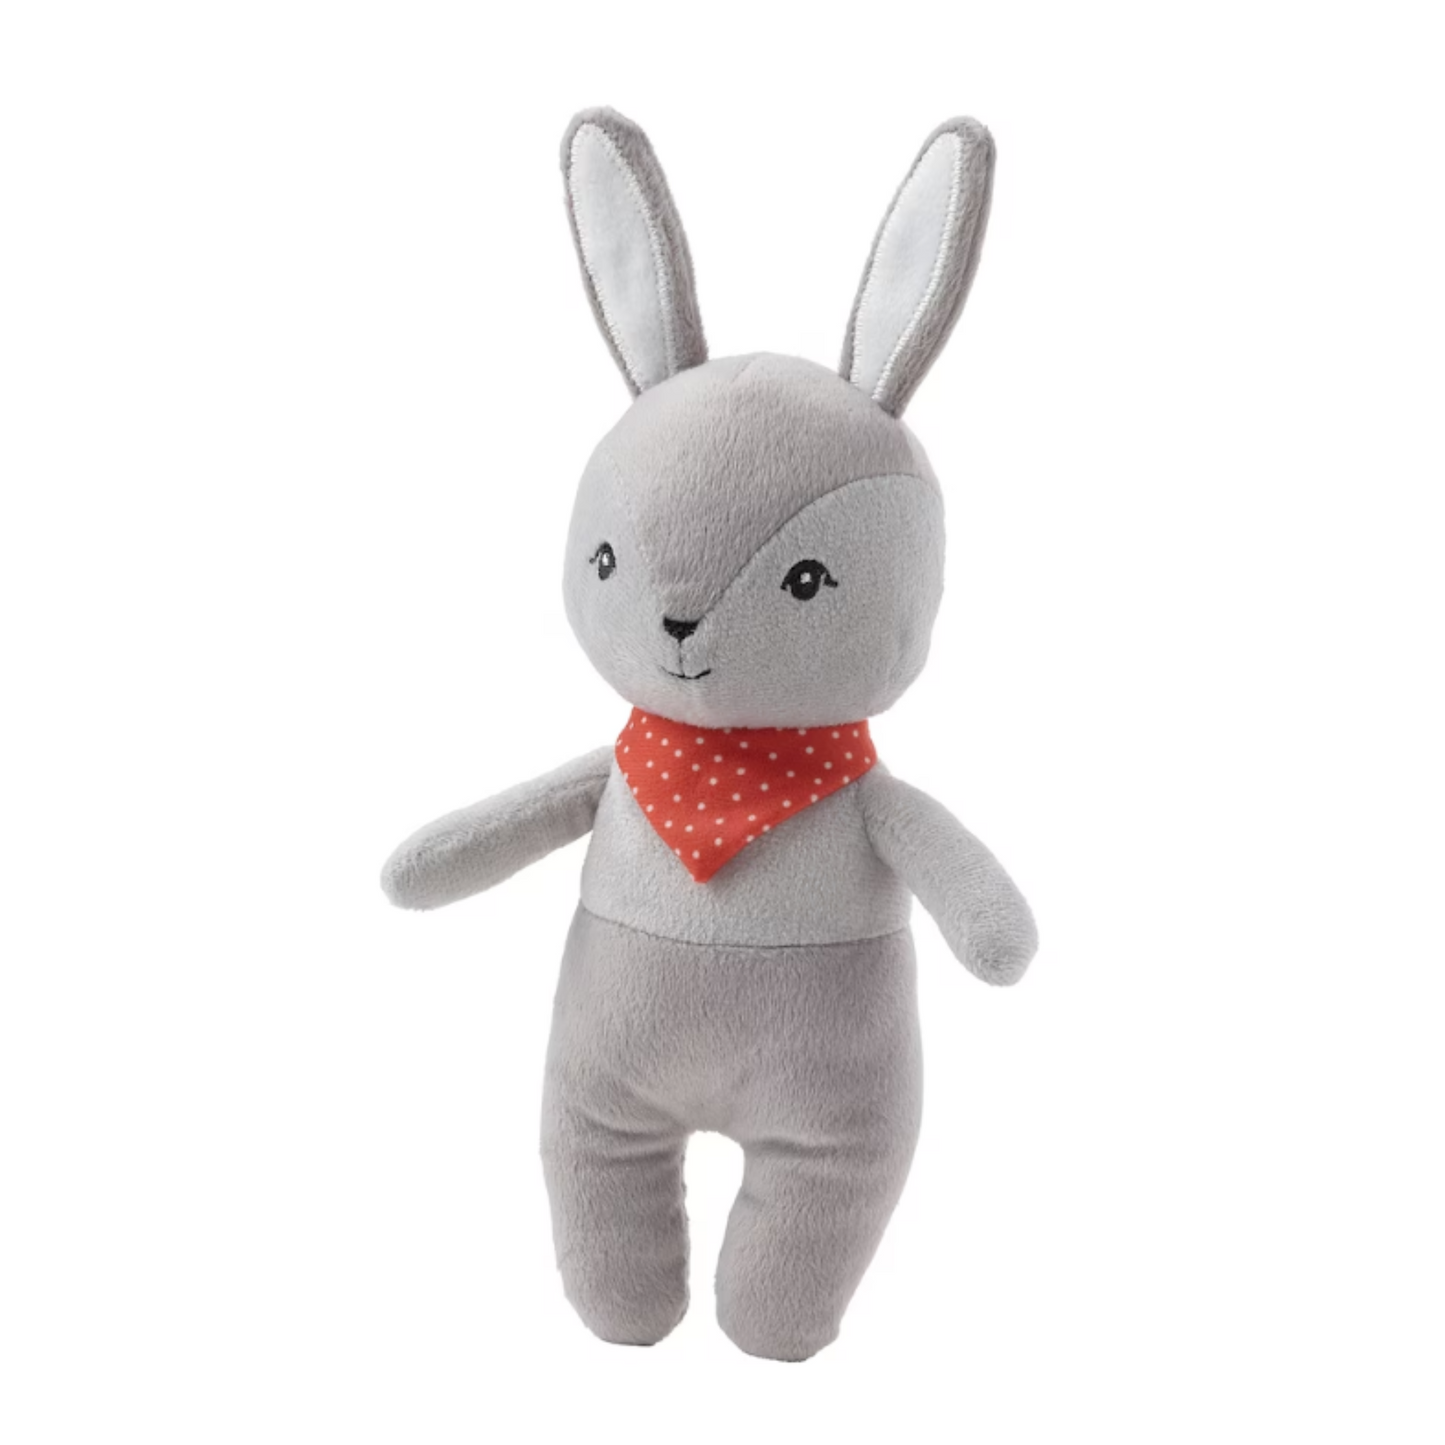 Ikea Gulligast Squeaky Soft Toy (8141667402015)